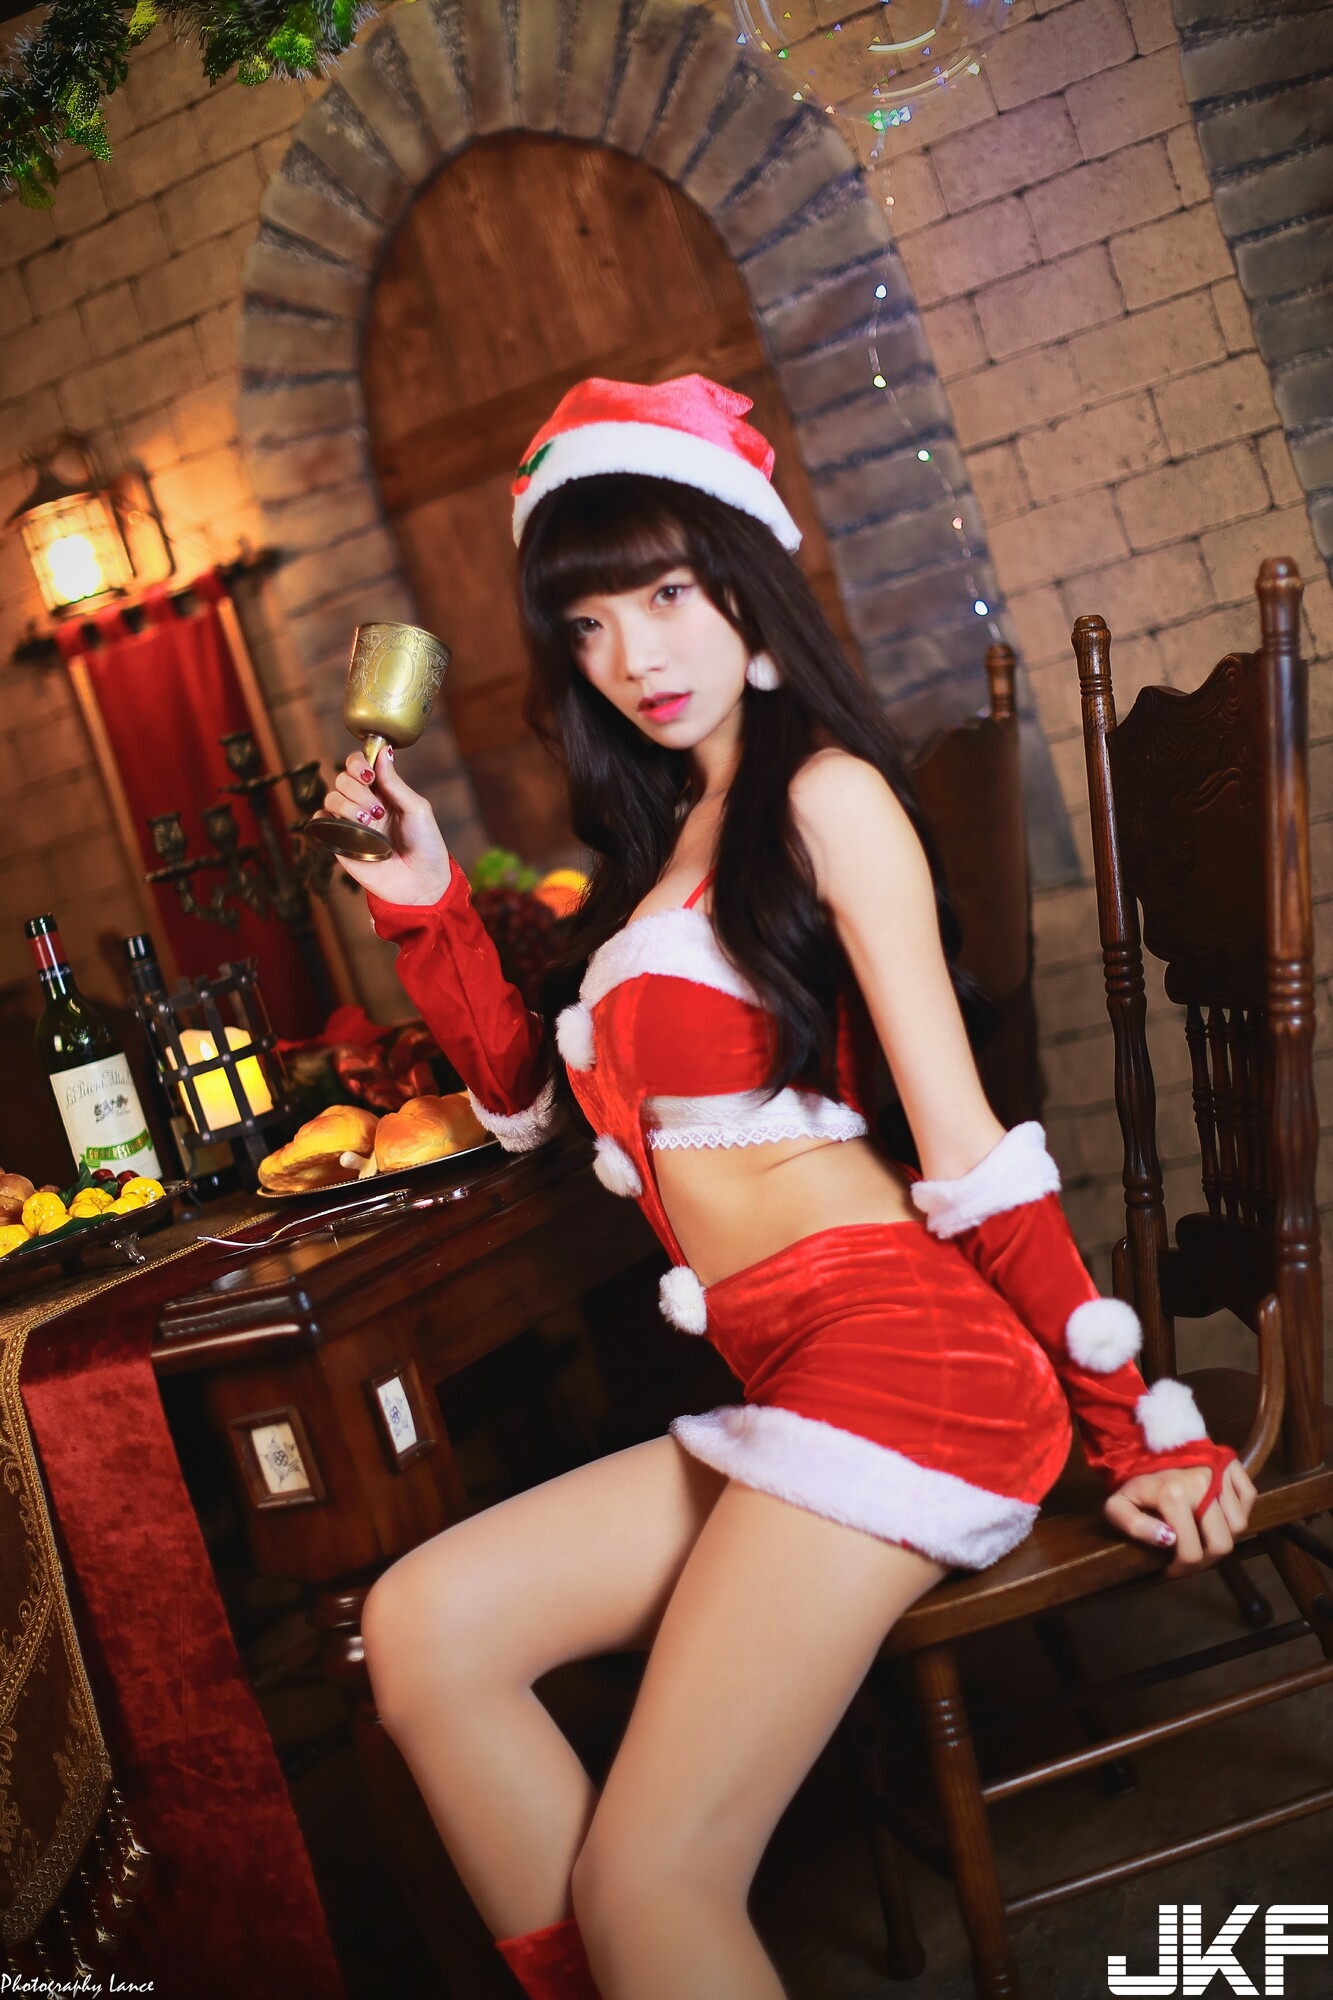 【Model寫真系列】2017聖誕女郎 Kitty 聖誕酒館【17P】 - 貼圖 - 絲襪美腿 -